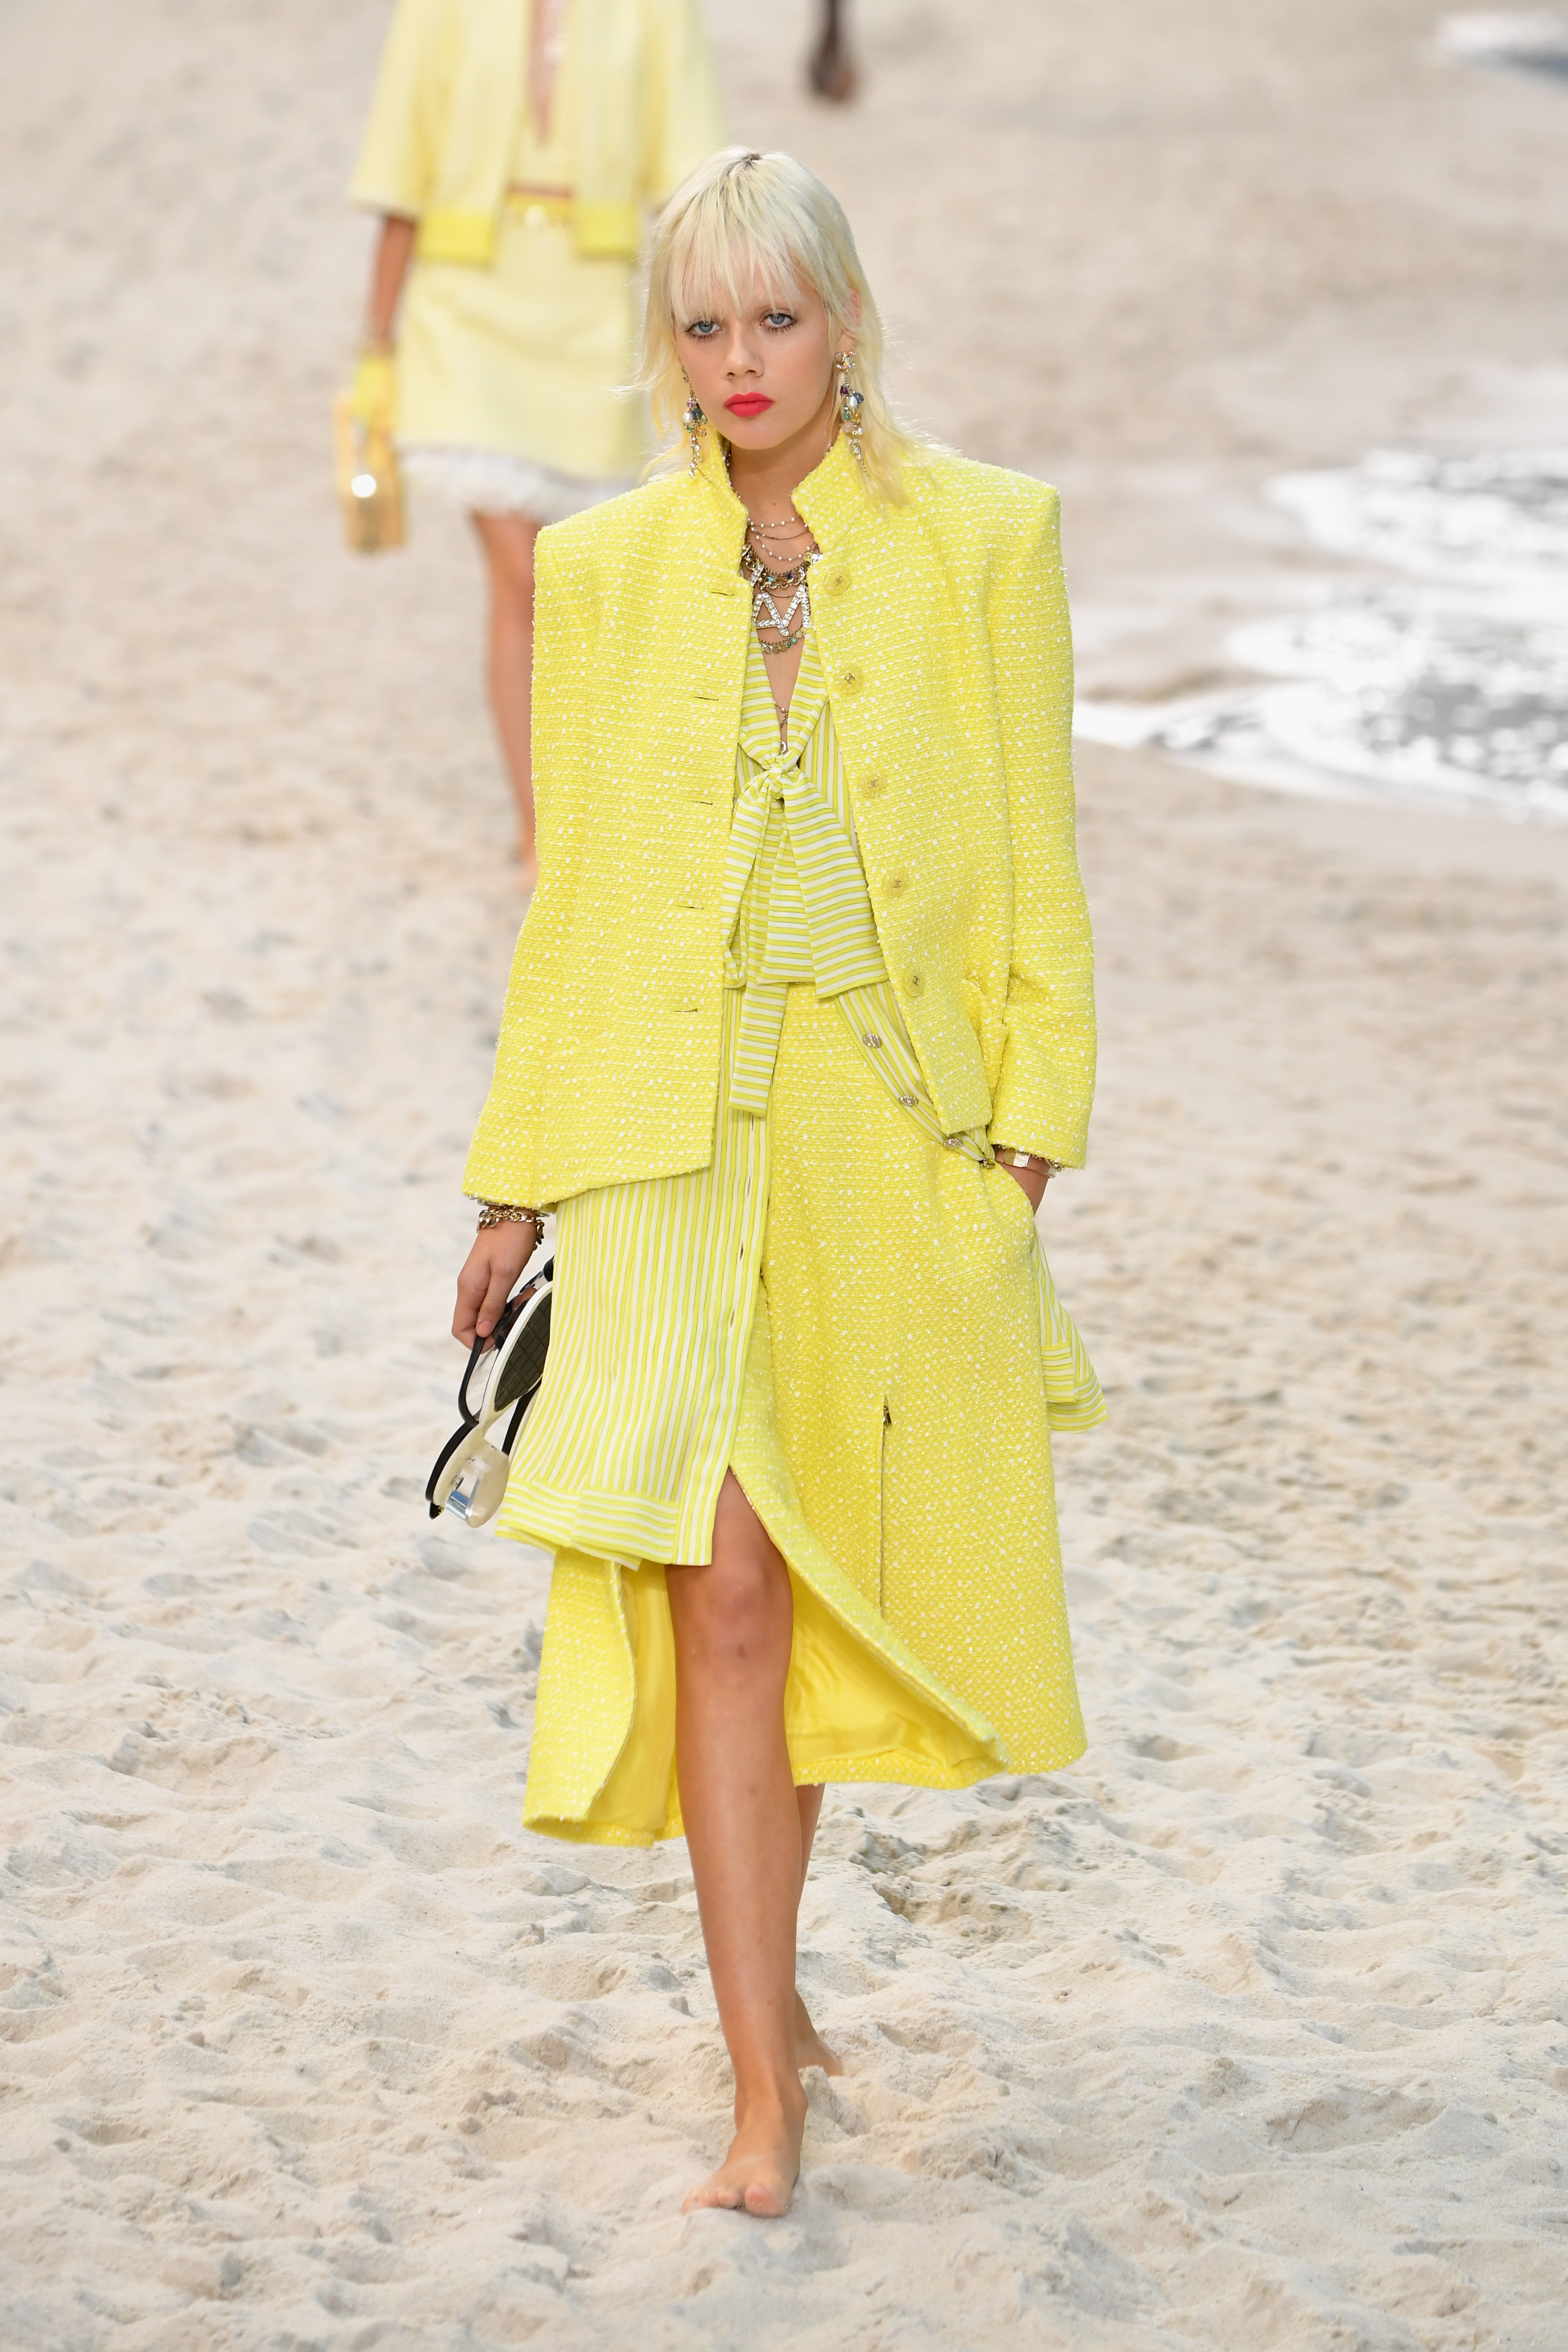 Pamela Anderson Frolics on the Chanel Beach - GARAGE